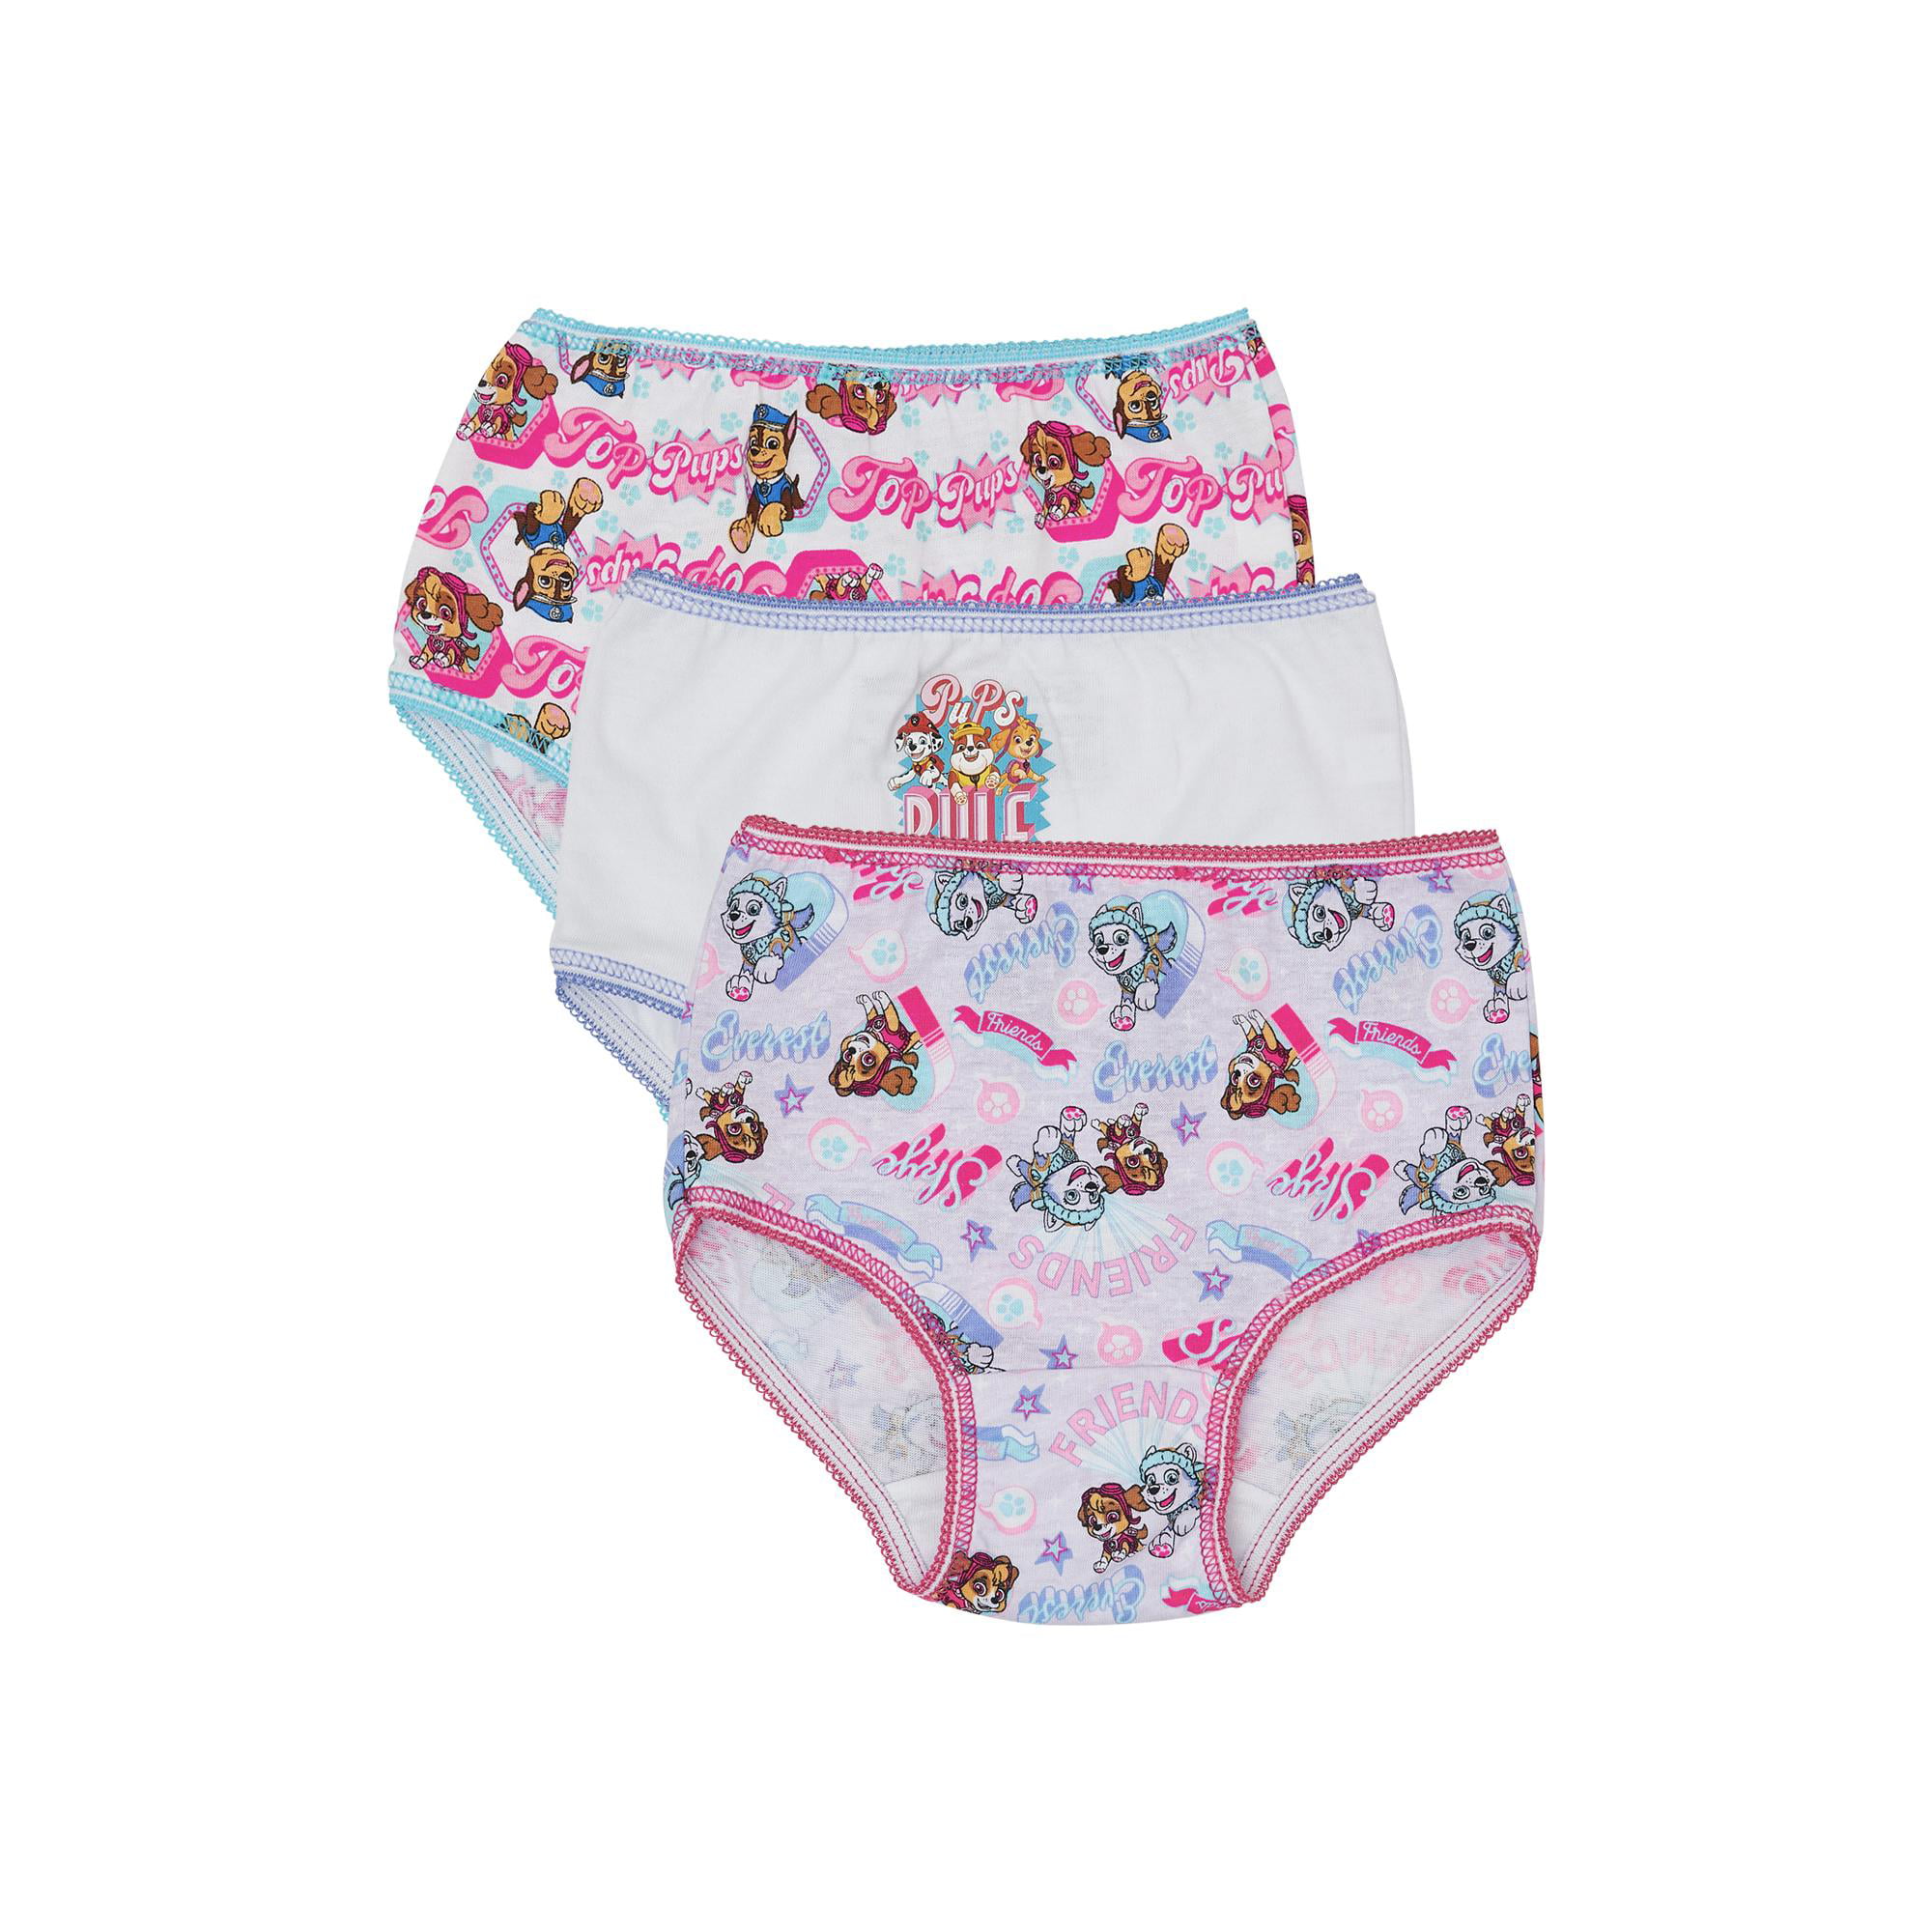 Girls Pants Character 3 Pair Cotton Paw Patrol Briefs Underwear 